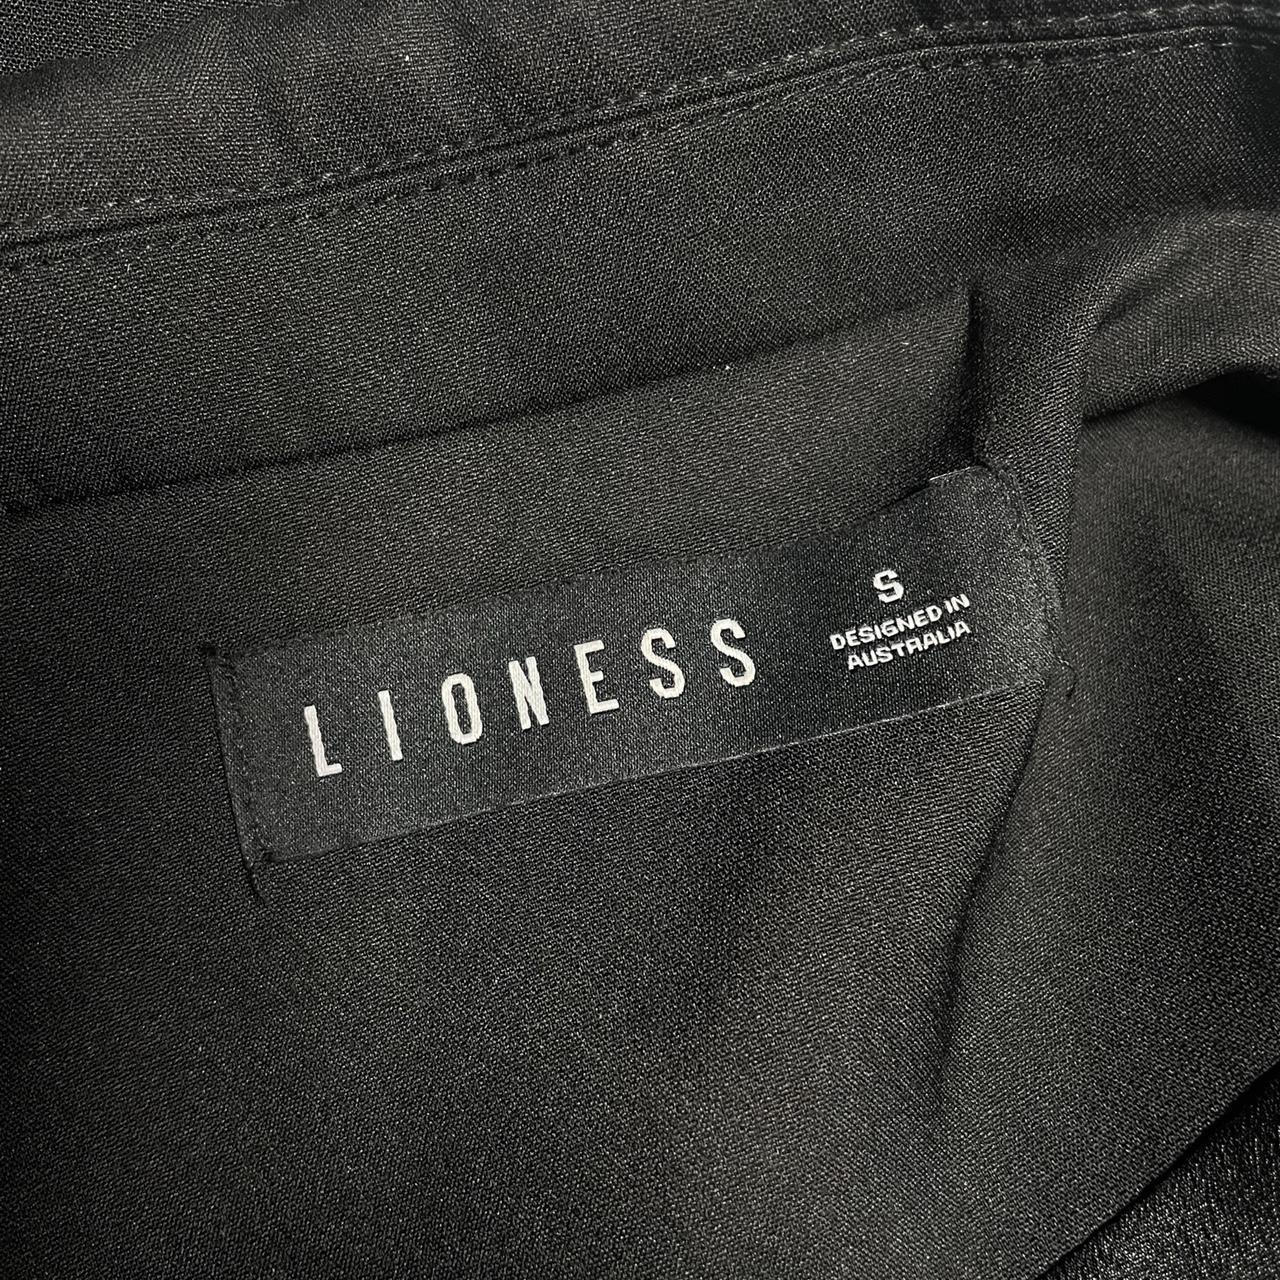 Lioness Women's Black Jacket (4)